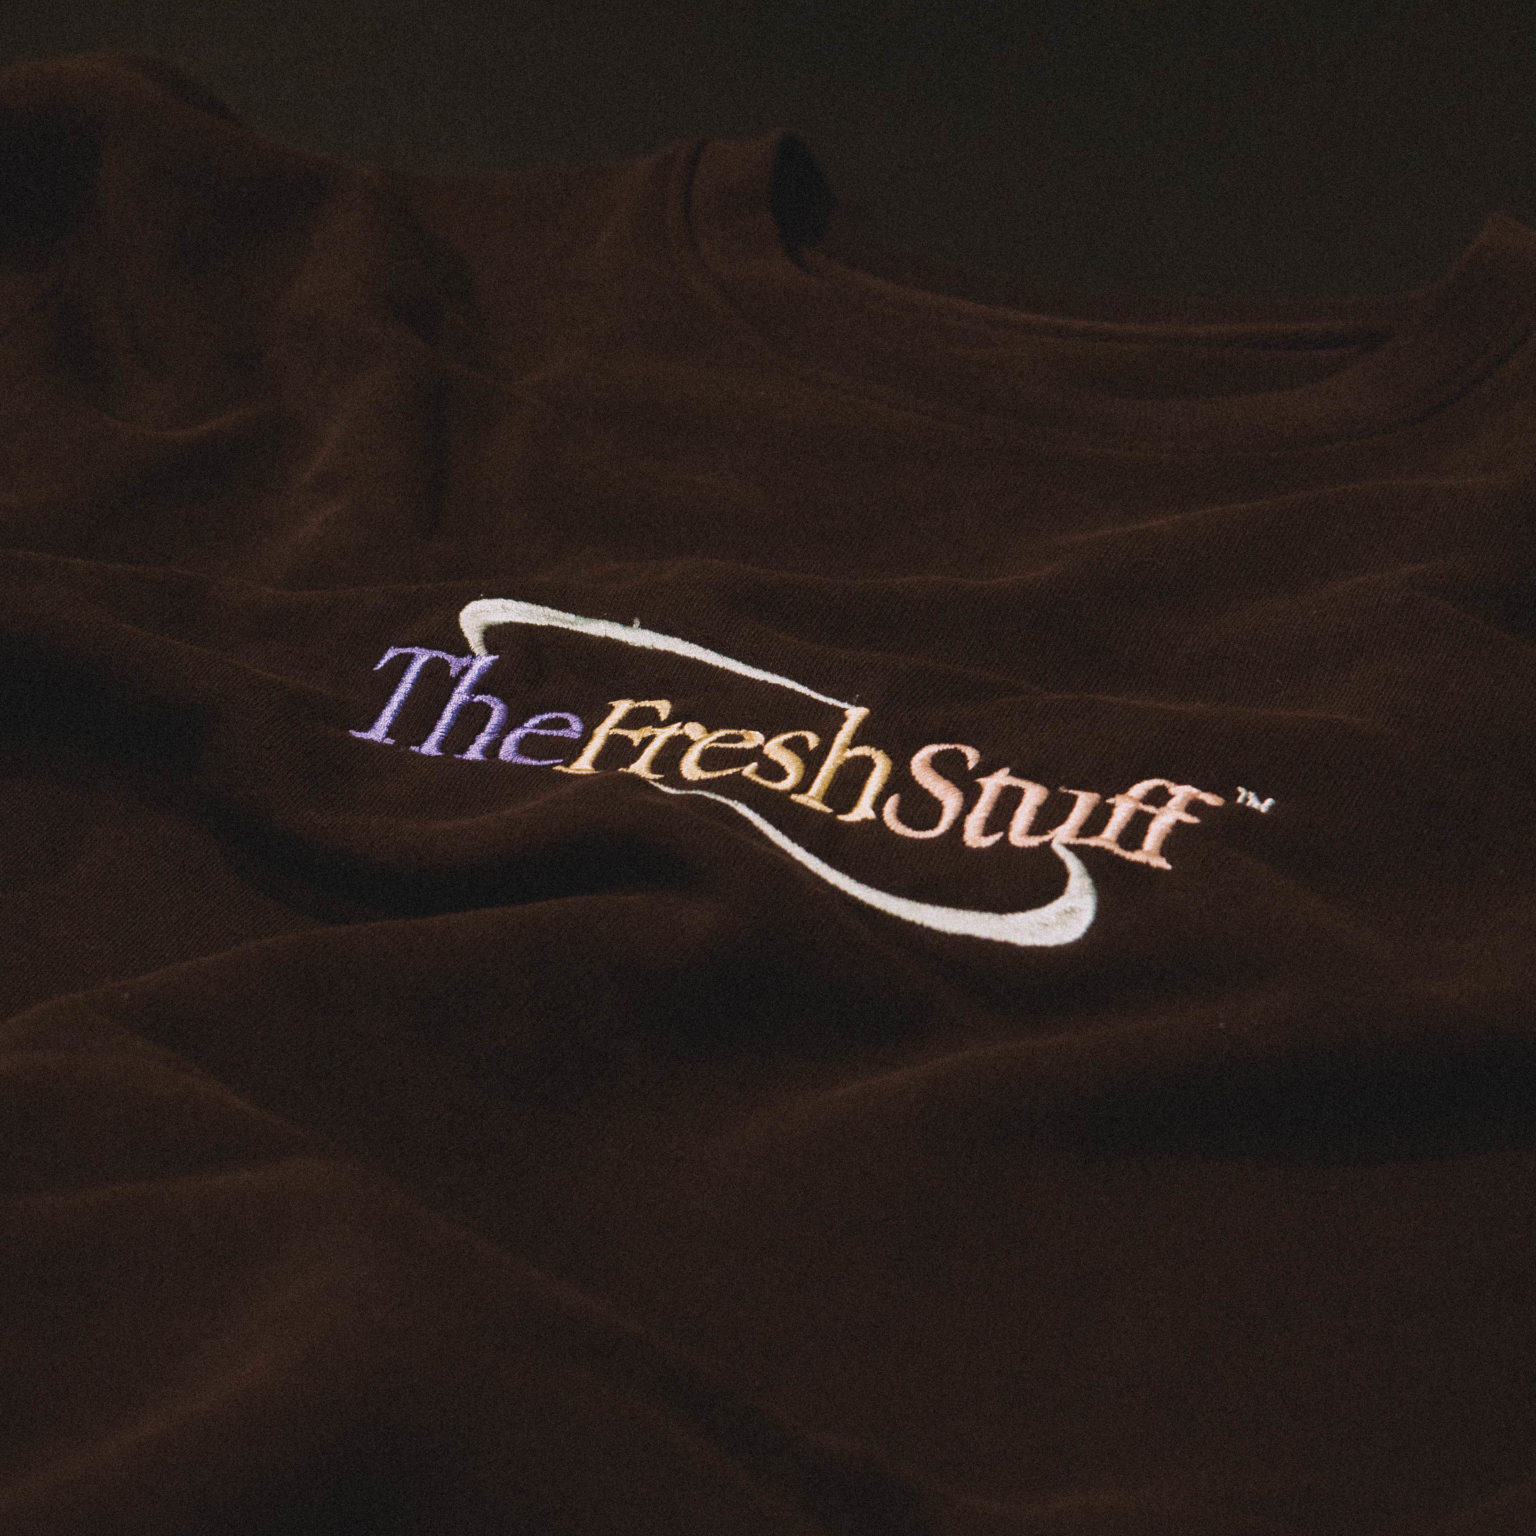 The Fresh Stuff - Retro Logo Unisex Embroidered Premium Heavy Sweater (Brown)